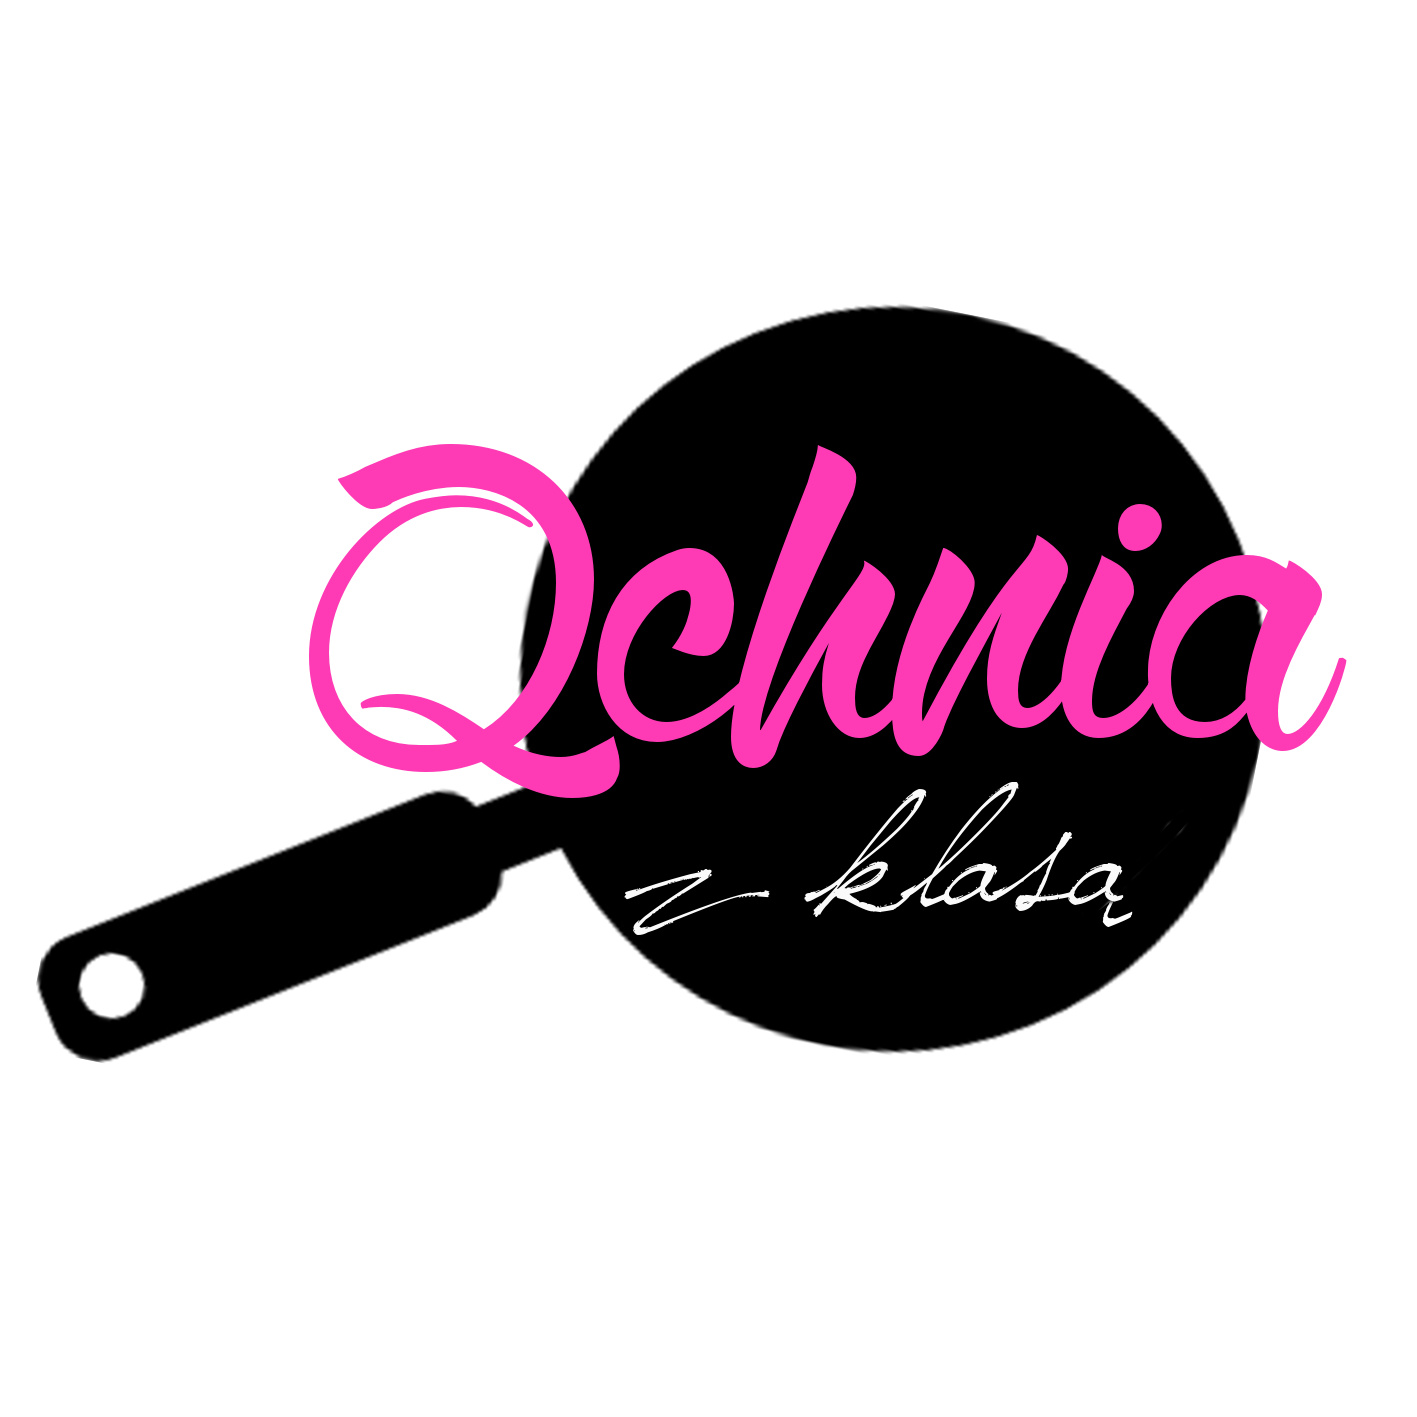 qchnia_logo